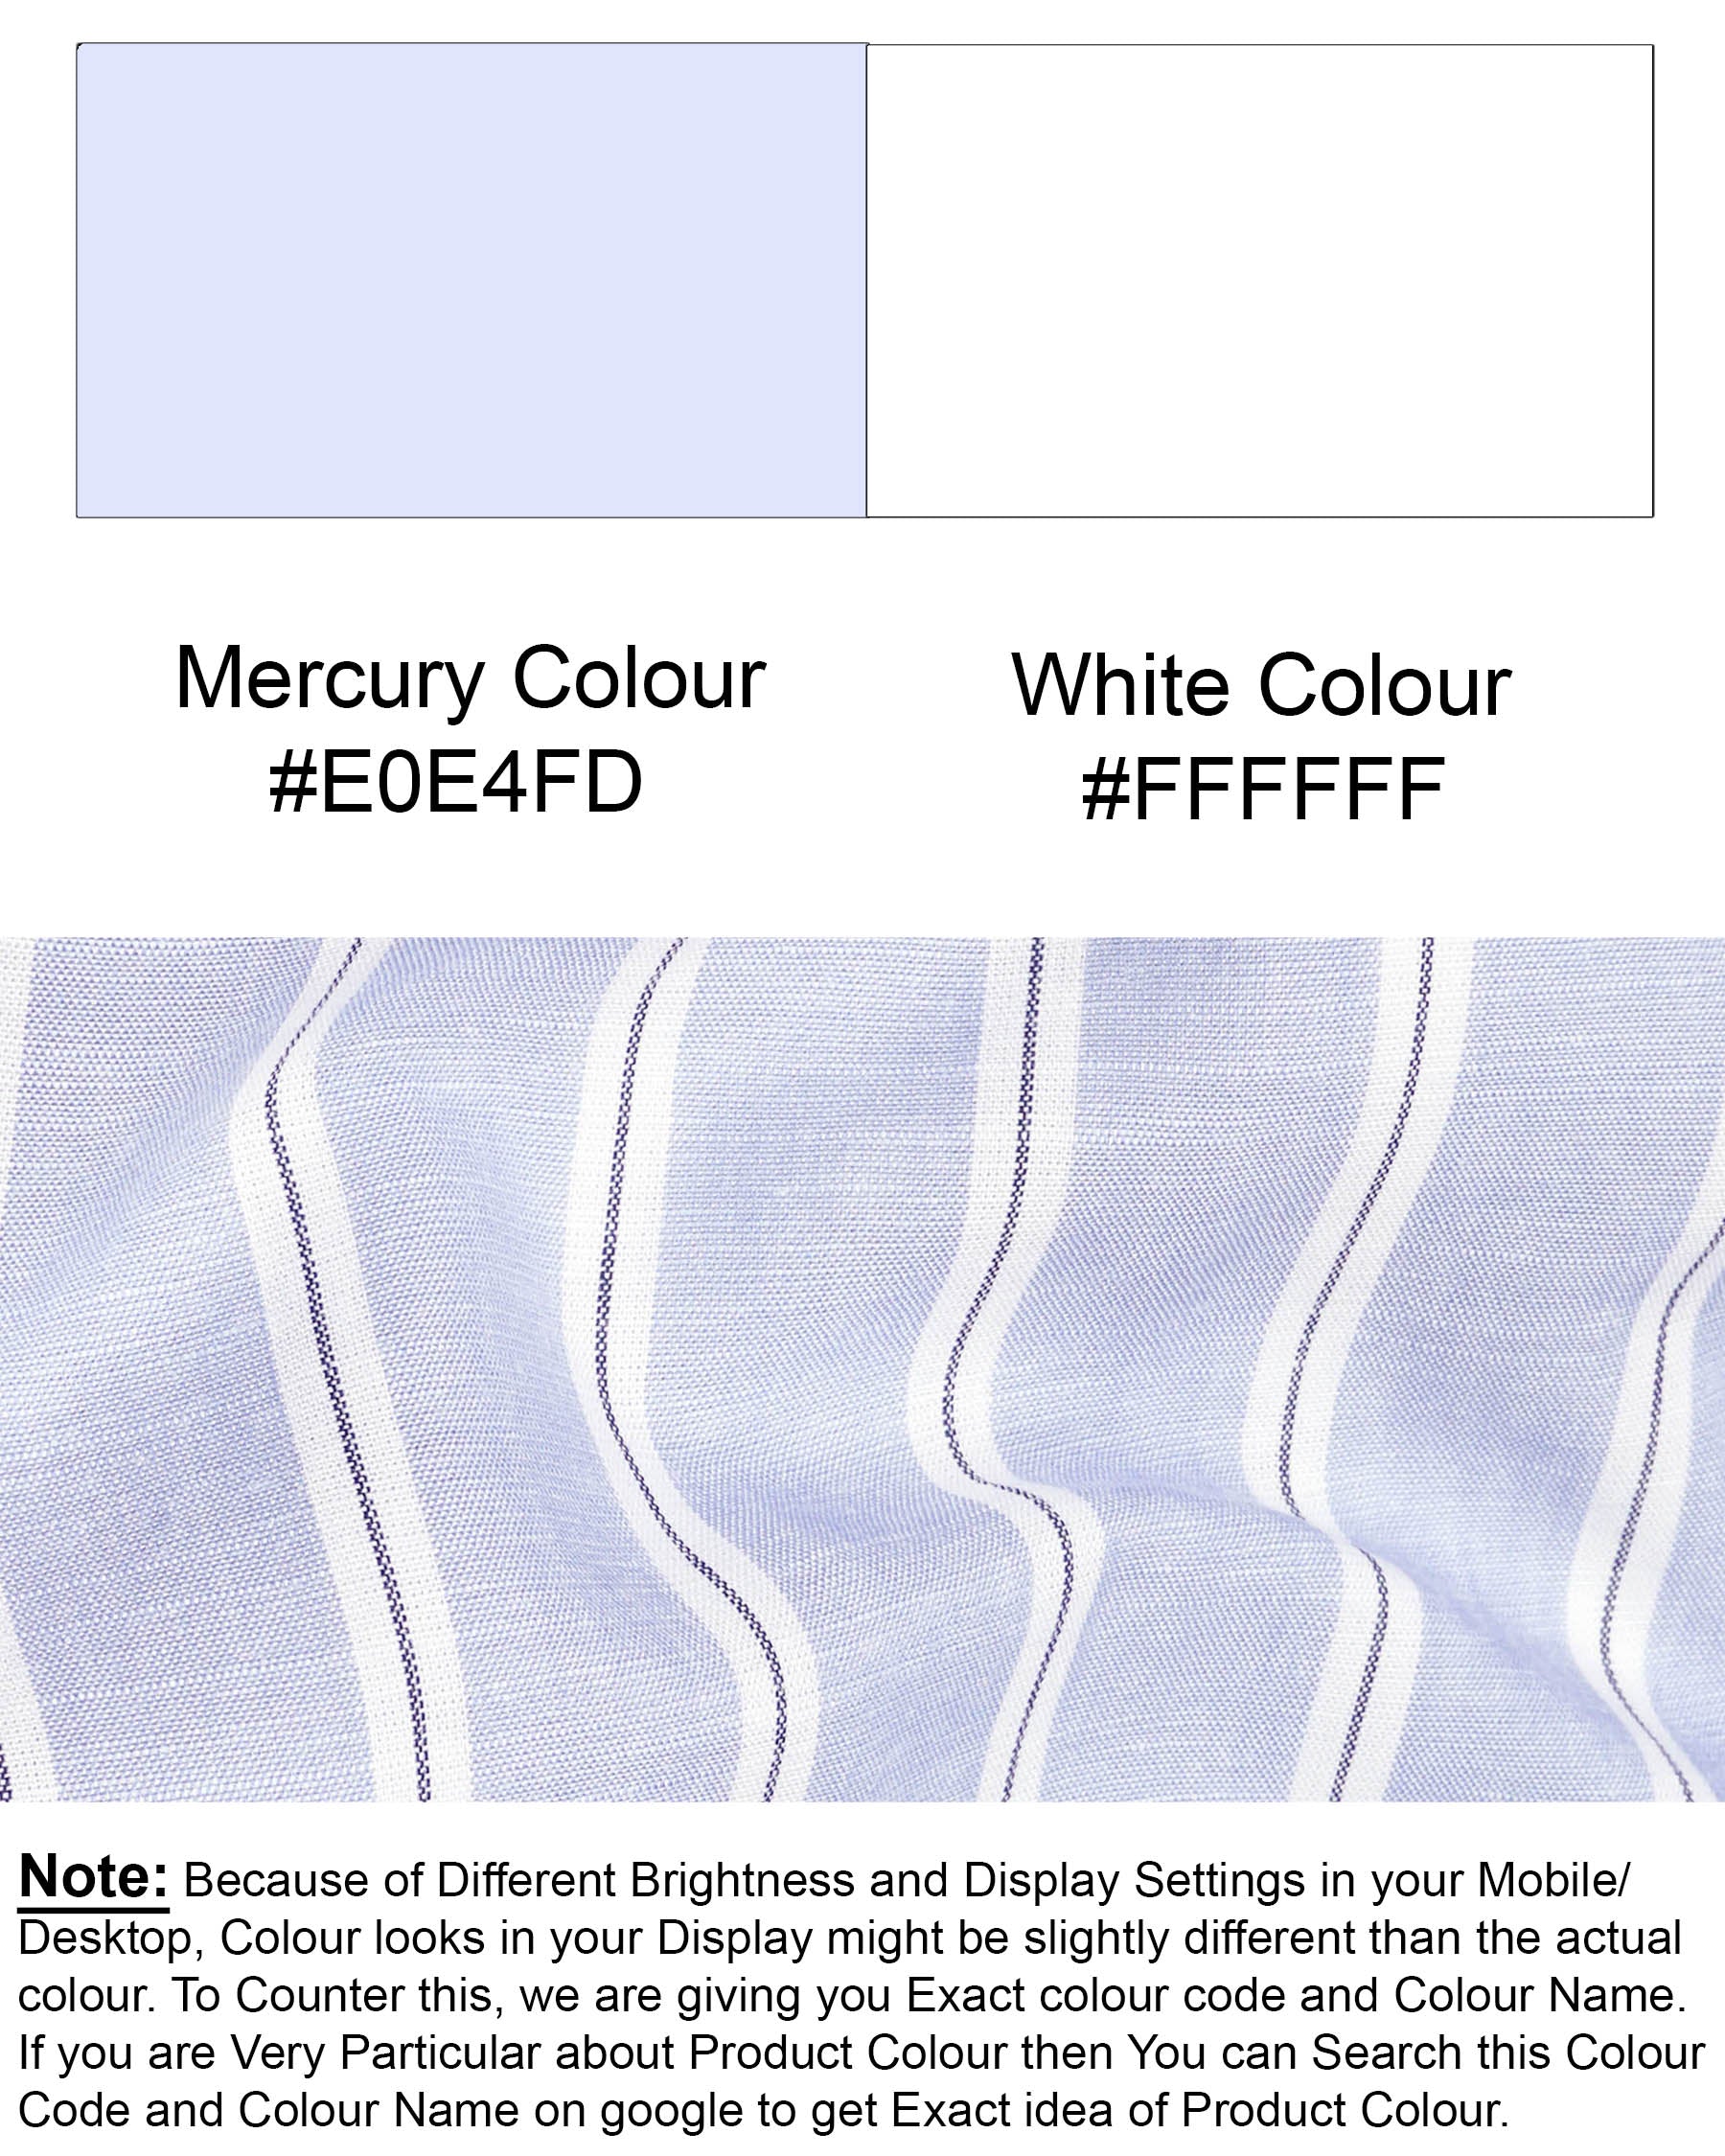  Mercury Blue with White Vertical Striped Twill Premium Cotton Shirt 7572-38, 7572-H-38, 7572-39, 7572-H-39, 7572-40, 7572-H-40, 7572-42, 7572-H-42, 7572-44, 7572-H-44, 7572-46, 7572-H-46, 7572-48, 7572-H-48, 7572-50, 7572-H-50, 7572-52, 7572-H-52